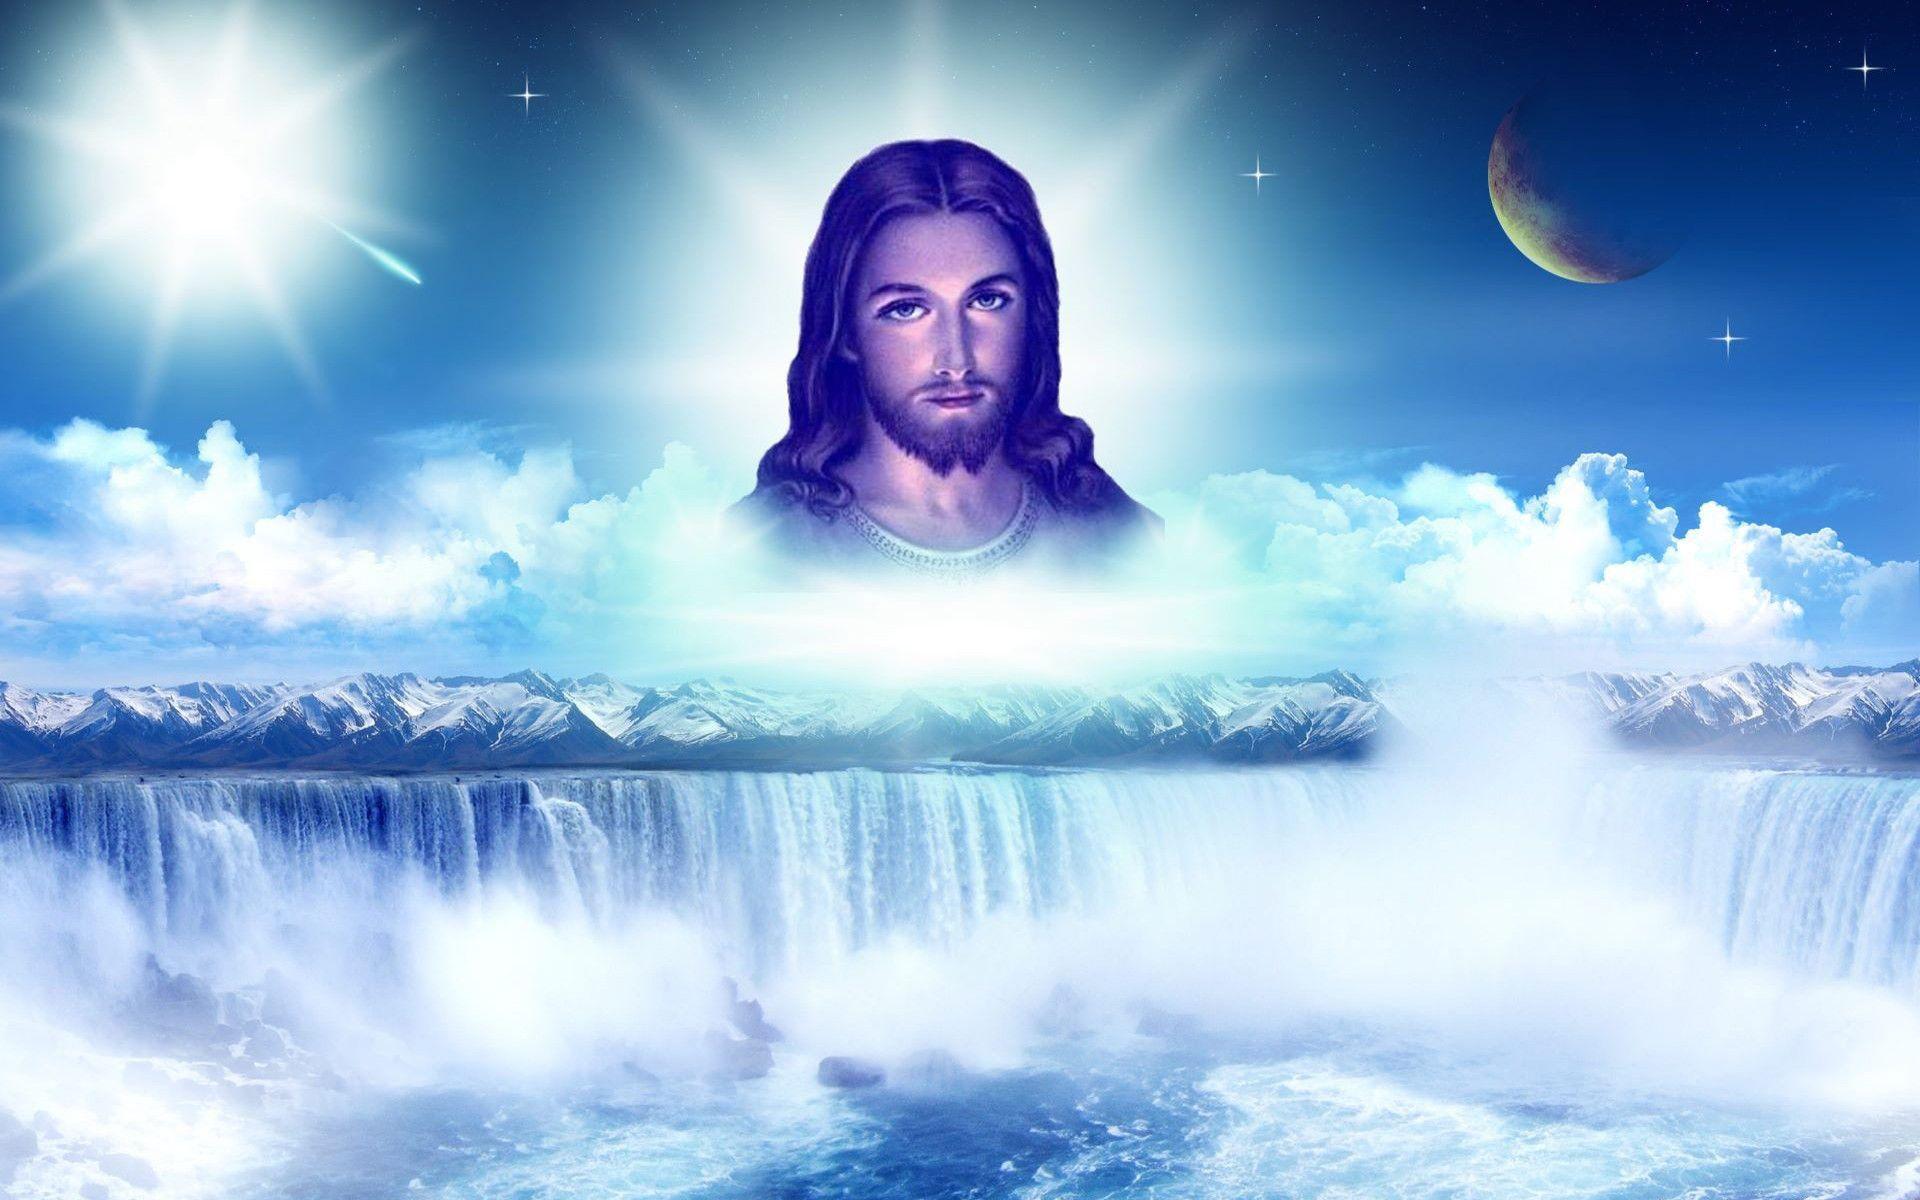 Jesus Christ Desktop Background